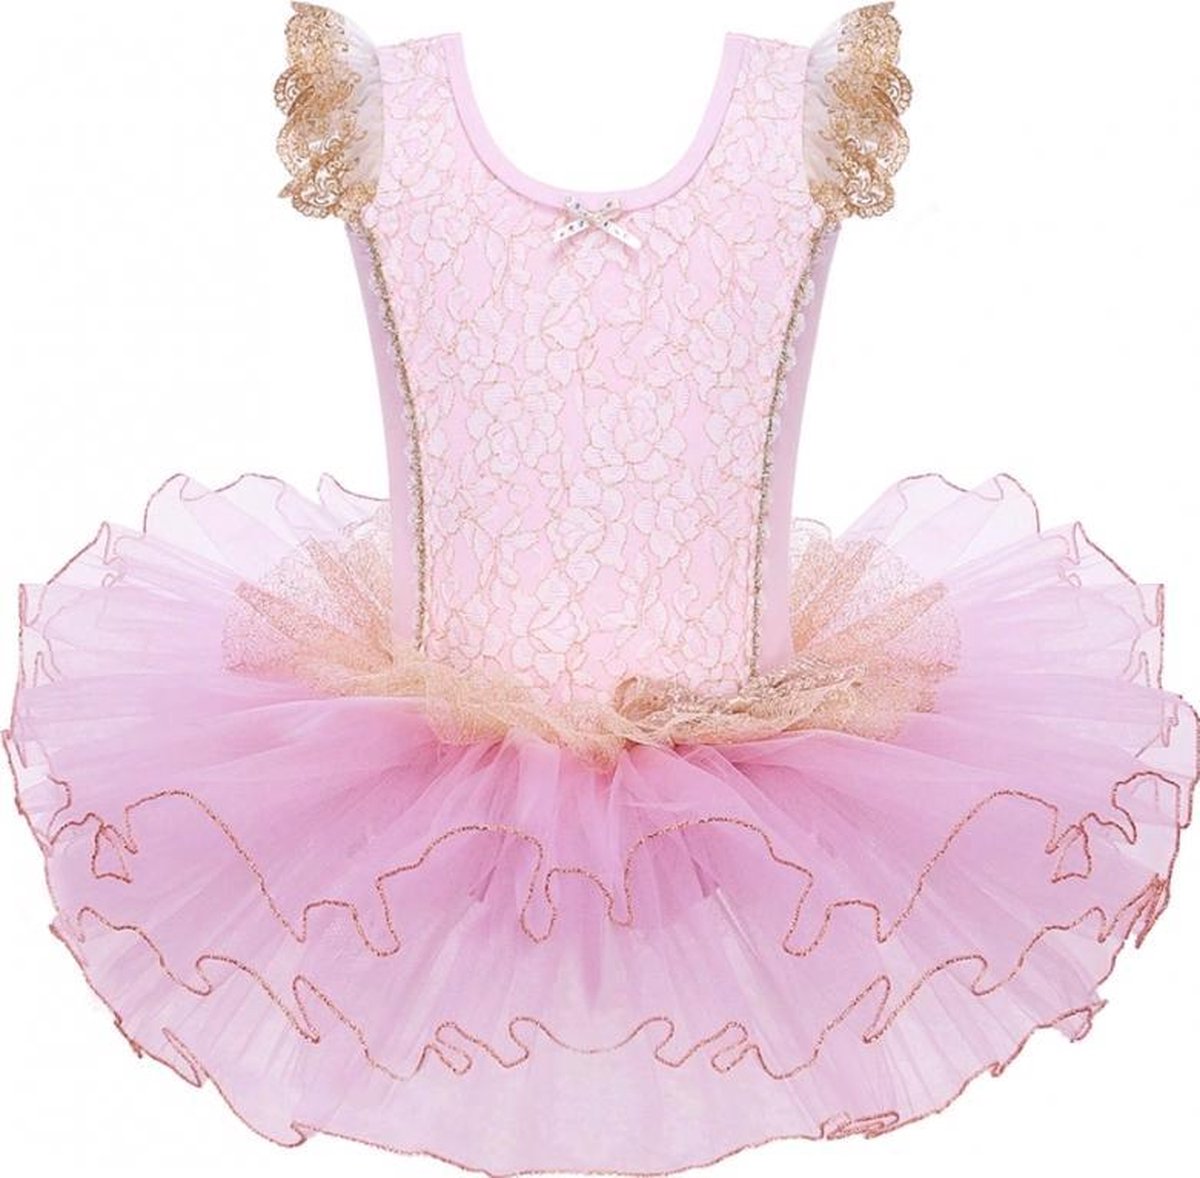 Goud Roze Balletpakje Ballerina Lovely + Tutu - Ballet - maat 122-128 prinsessen tutu verkleed jurk meisje